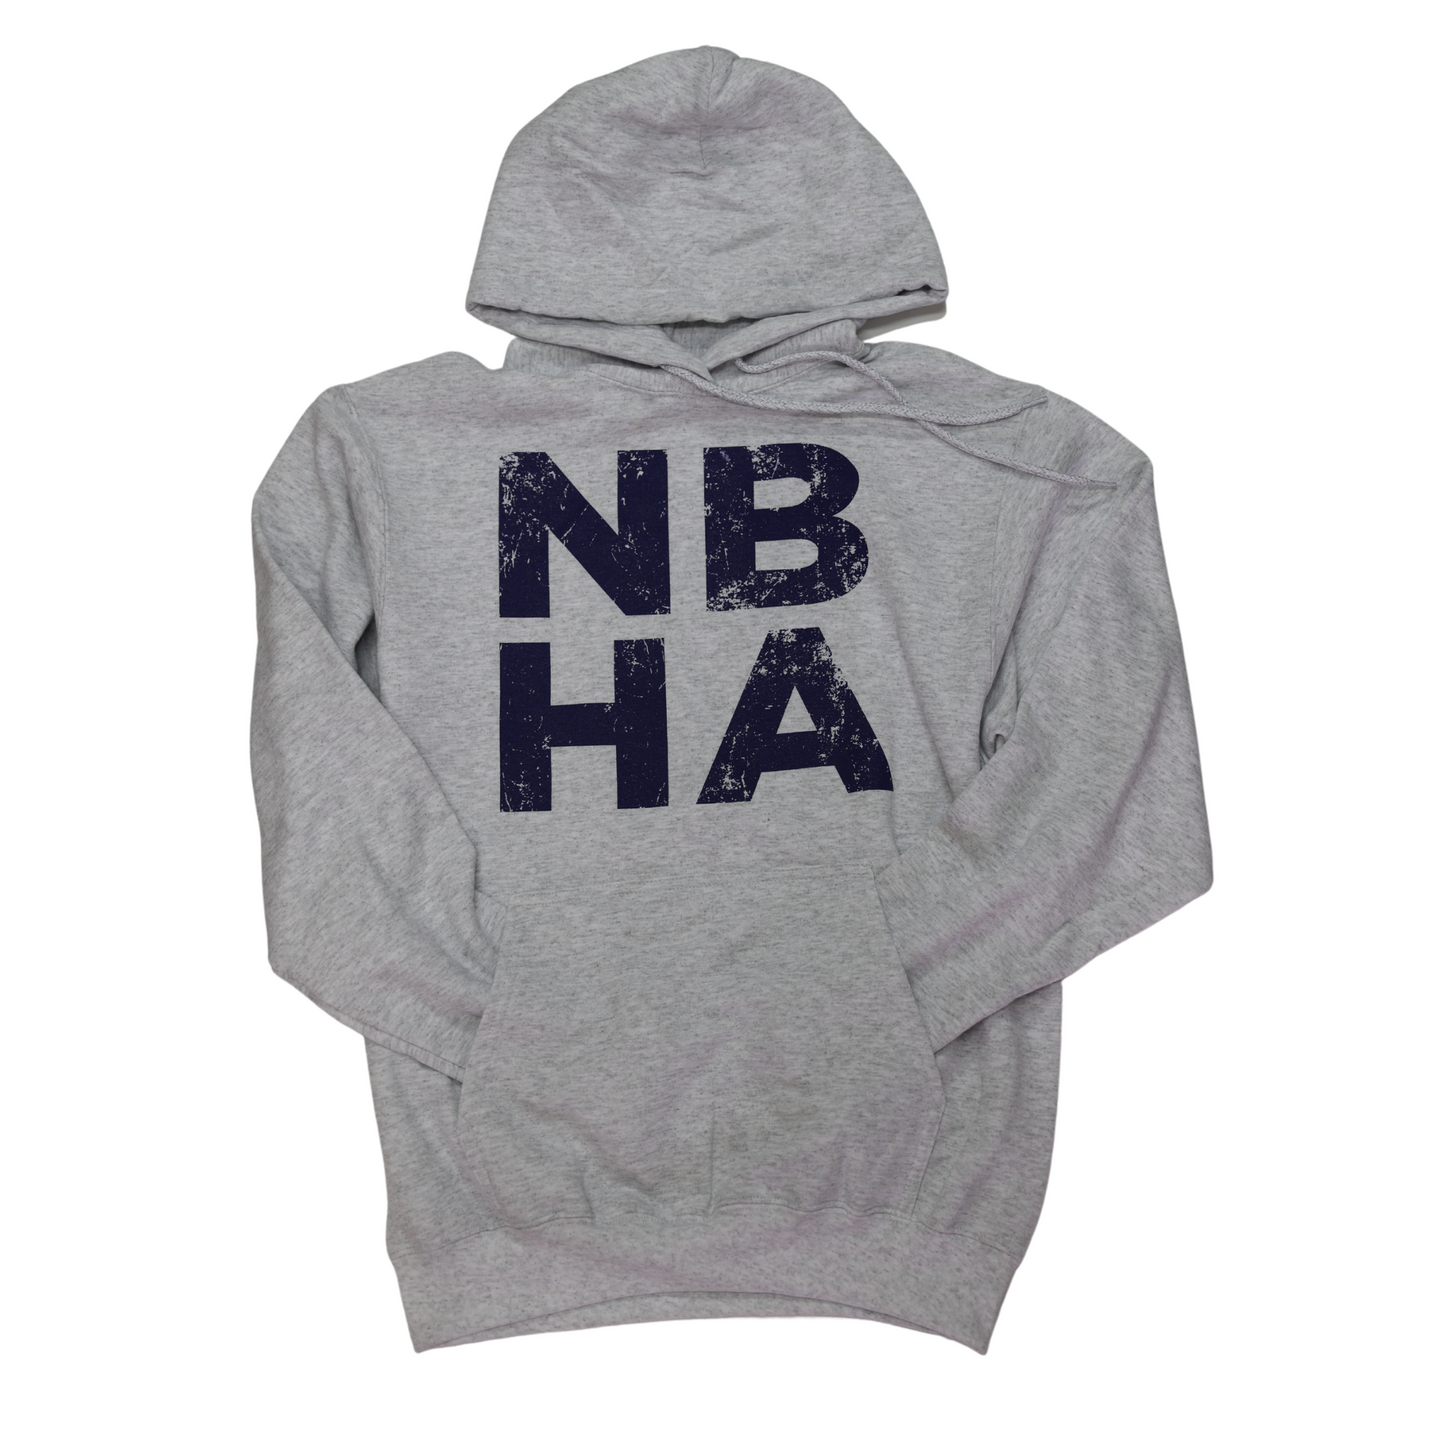 NBHA Hooded Sweatshirt : Ash Grey